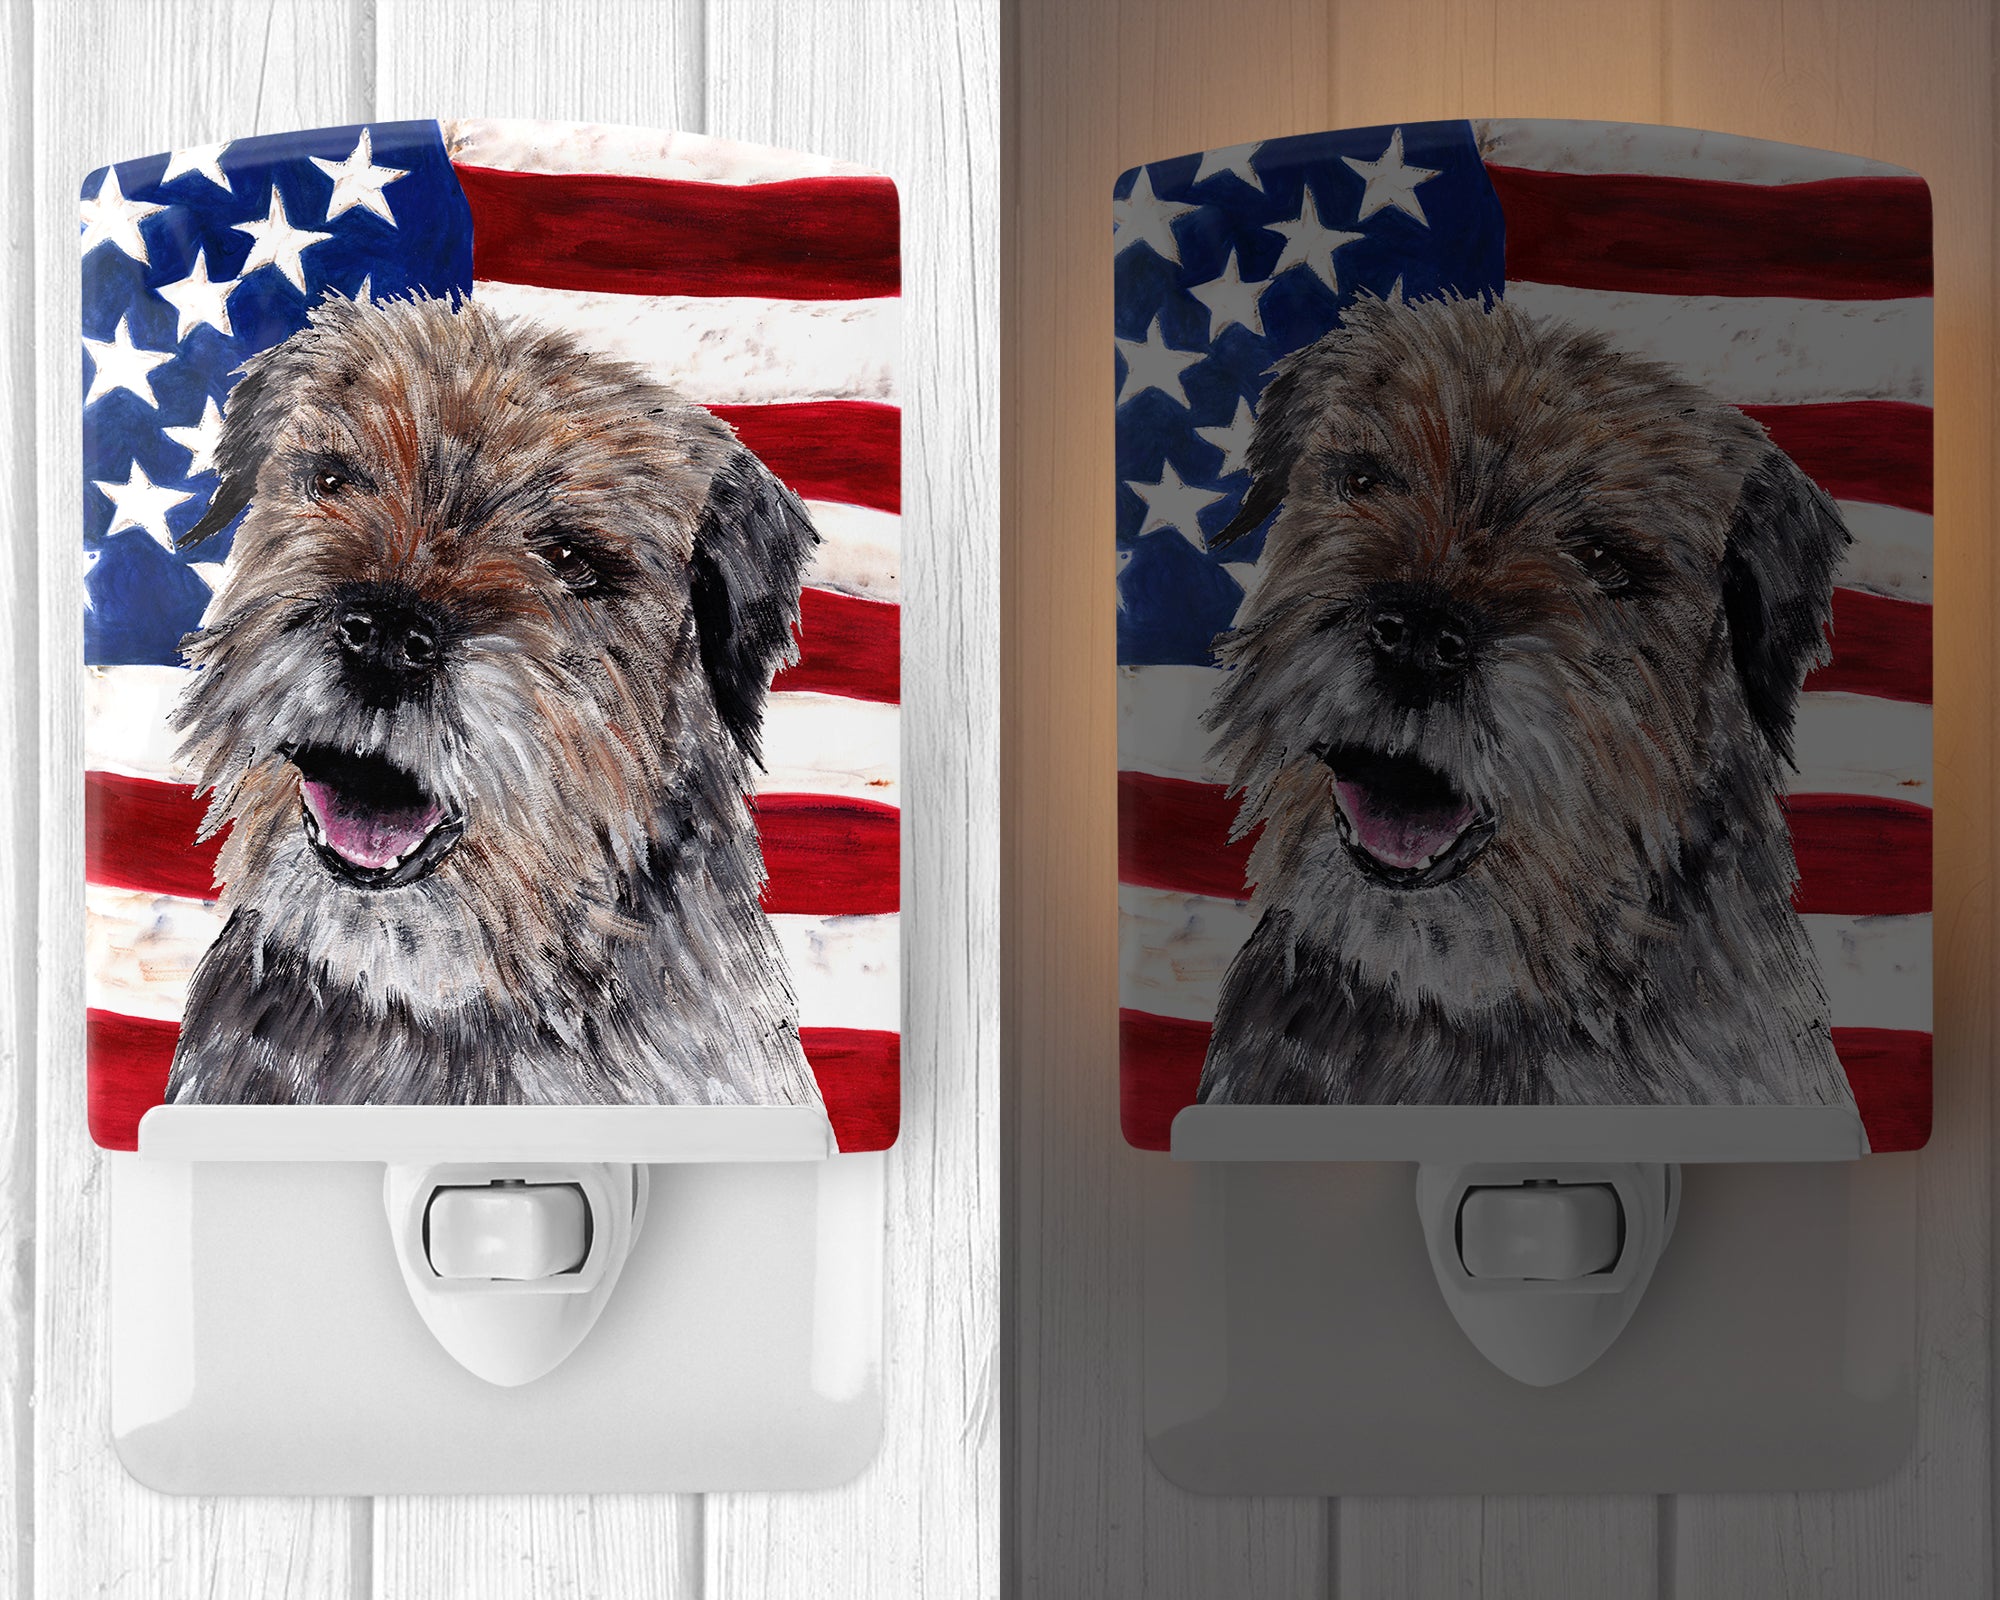 Border Terrier with American Flag Ceramic Night Light SC9515CNL - the-store.com